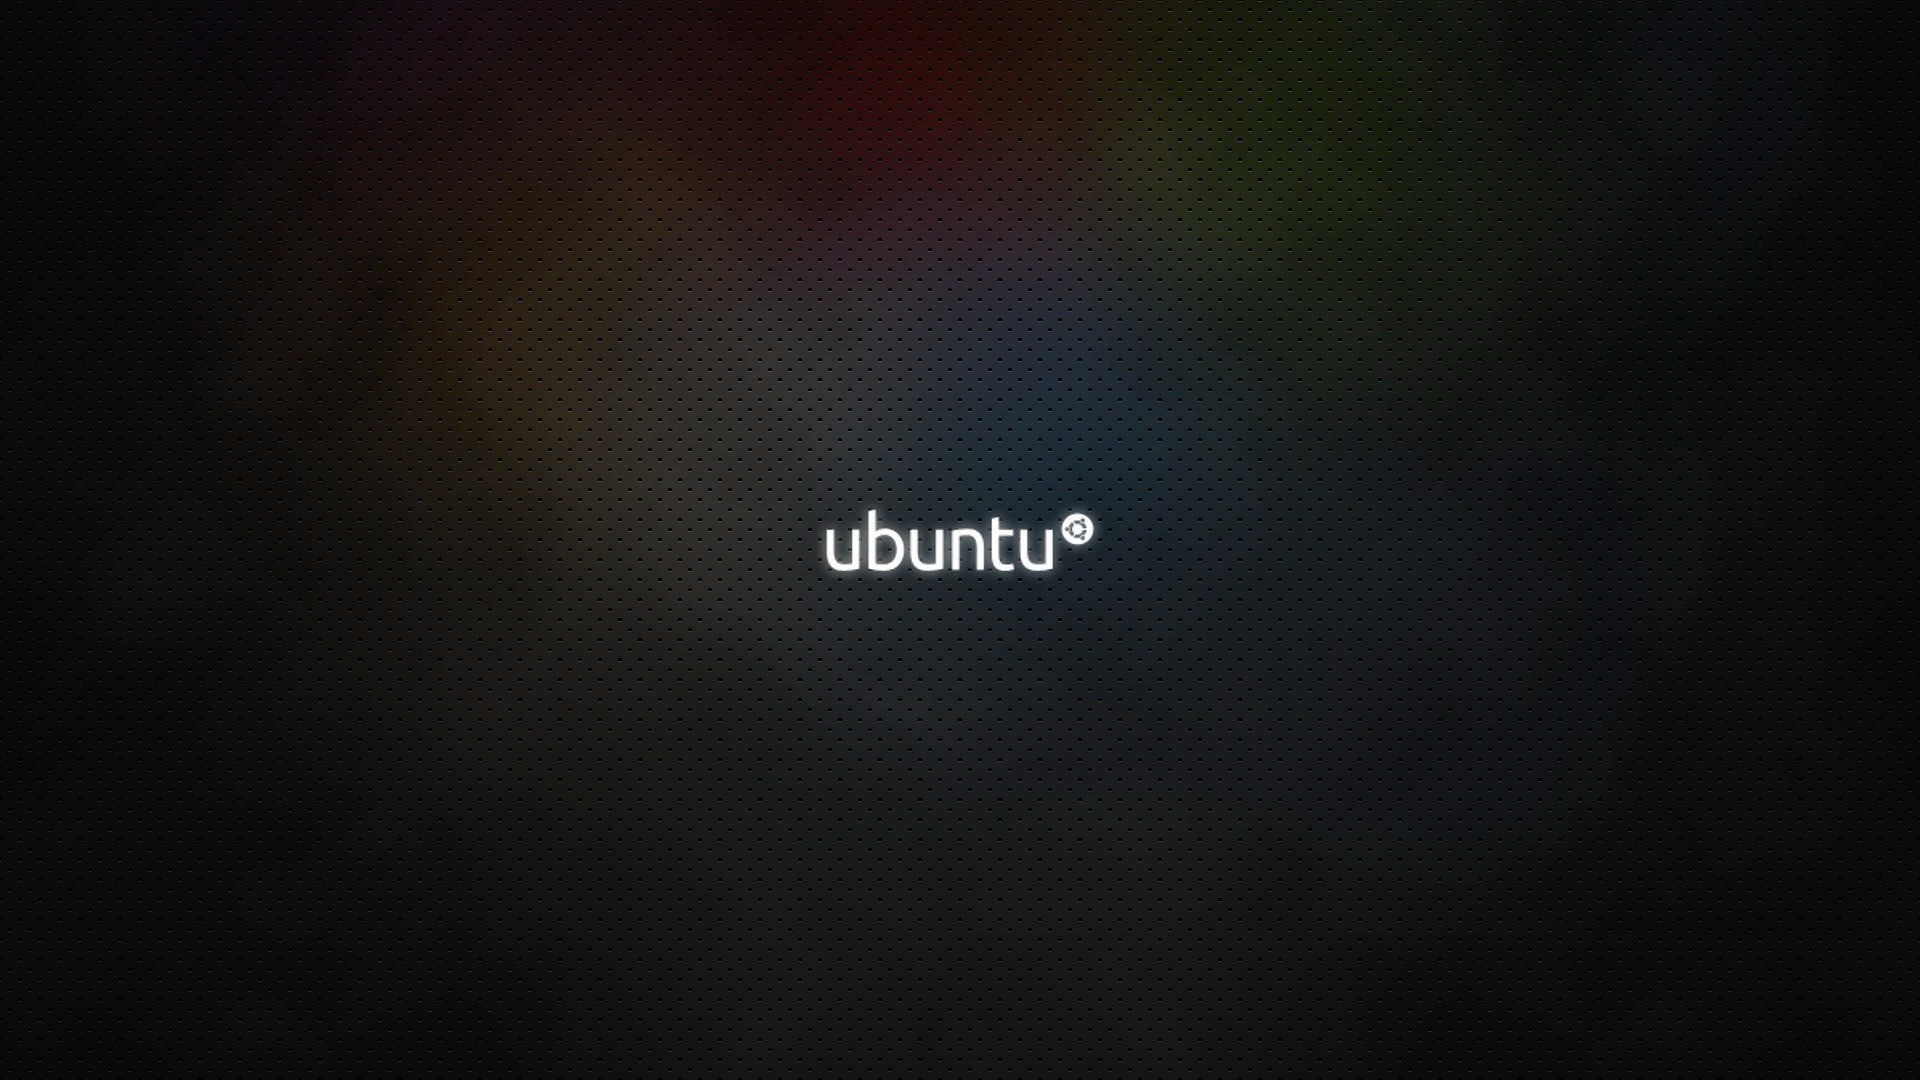 1920x1080 Ubuntu Desktop Wallpapers (28 Wallpapers) – Adorable Wallpapers Linux ...